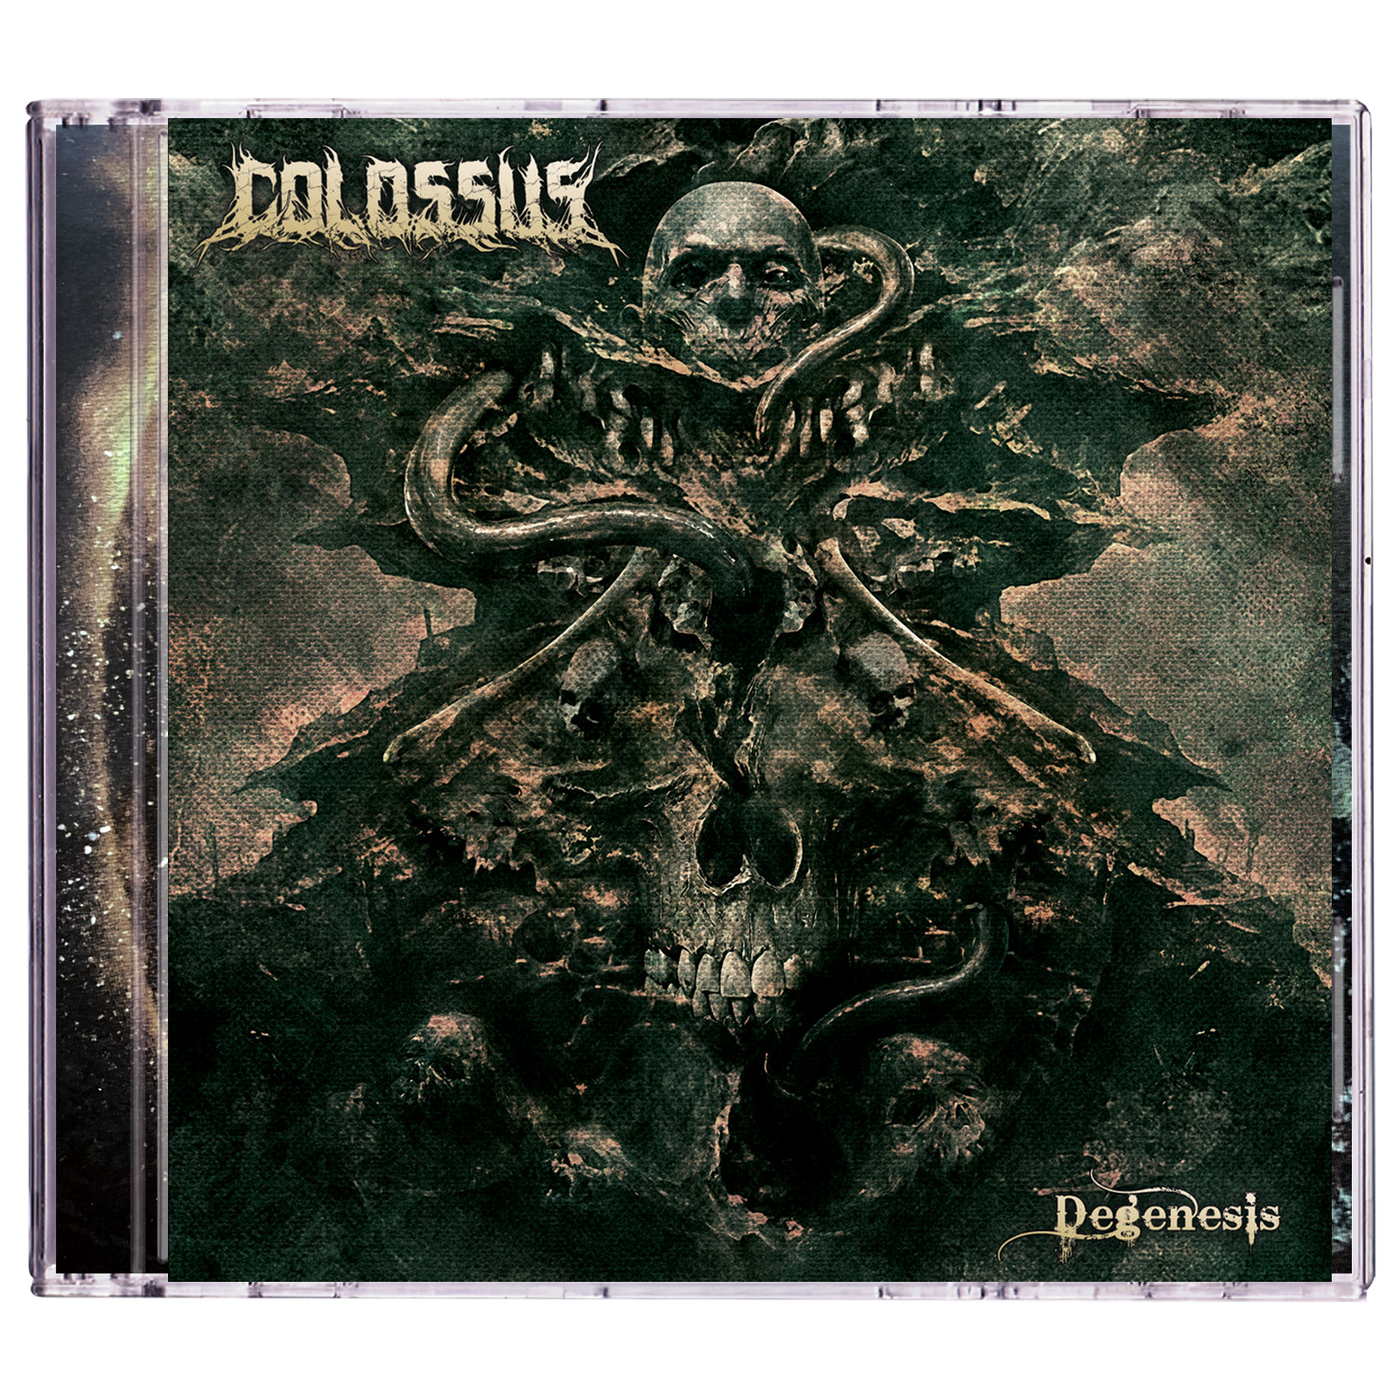 Colossus 'Degenesis' CD